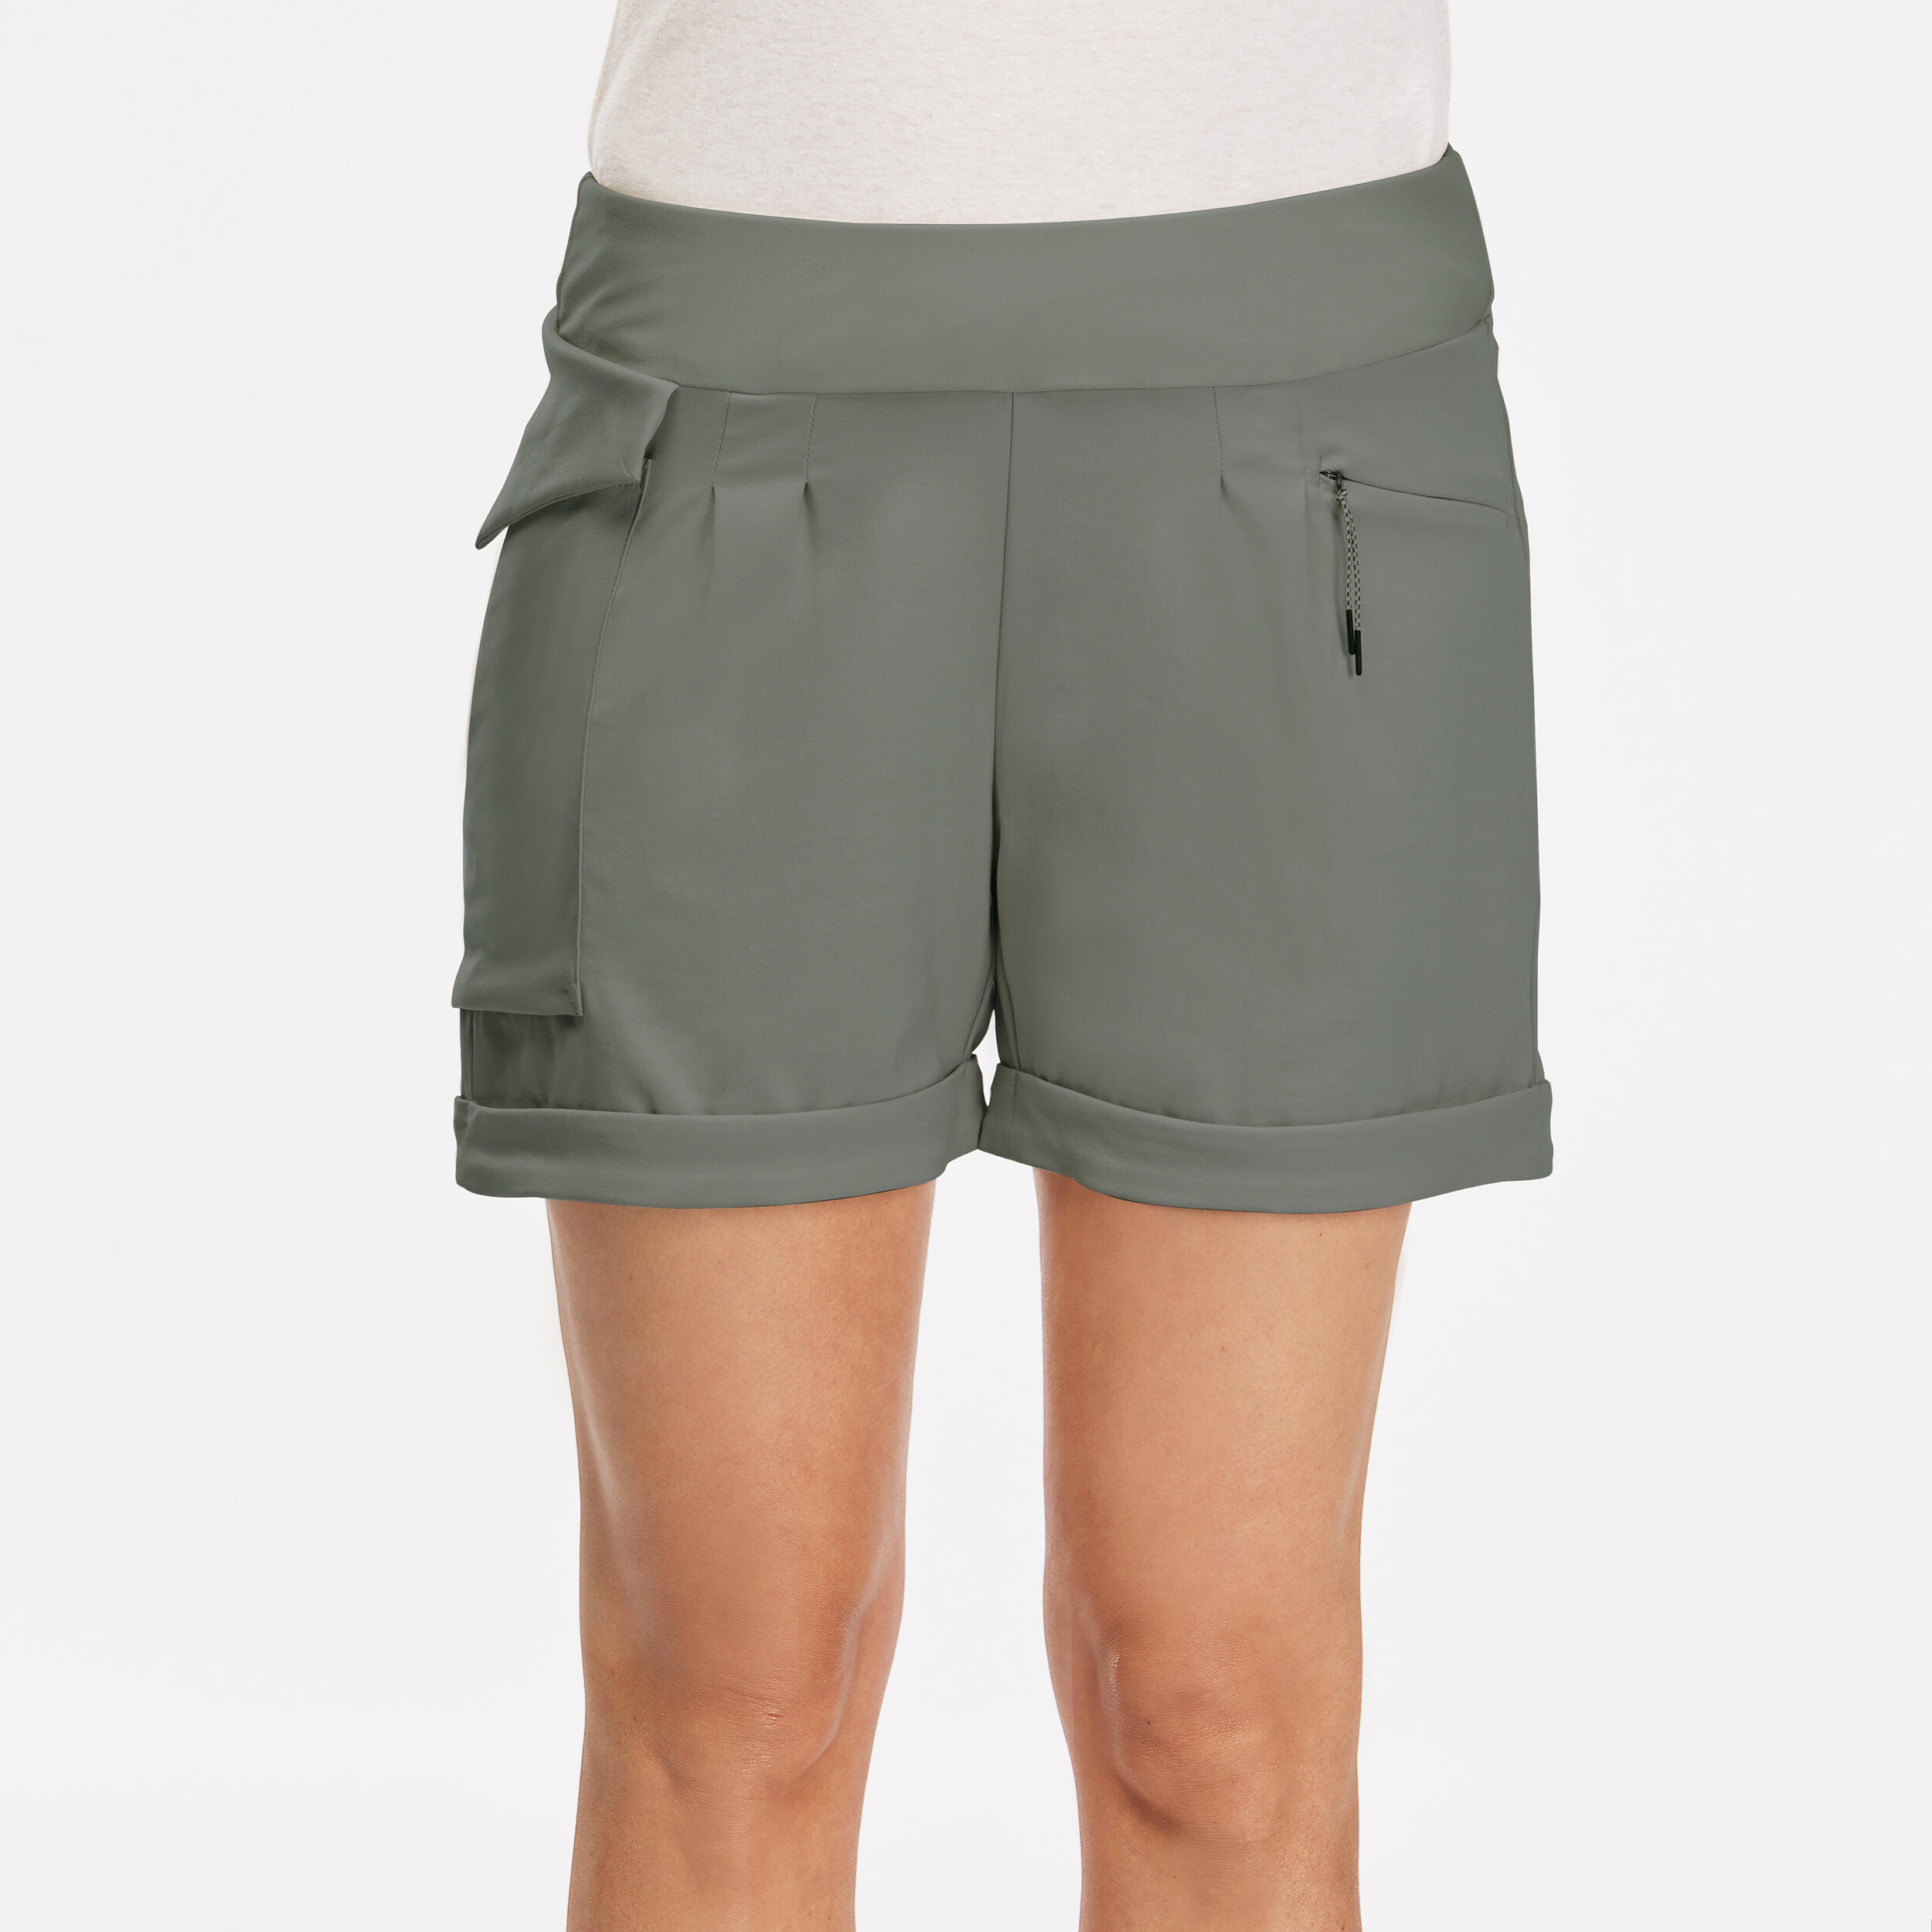 NH500 Regular Women's Country Walking Shorts - Khaki 8/8